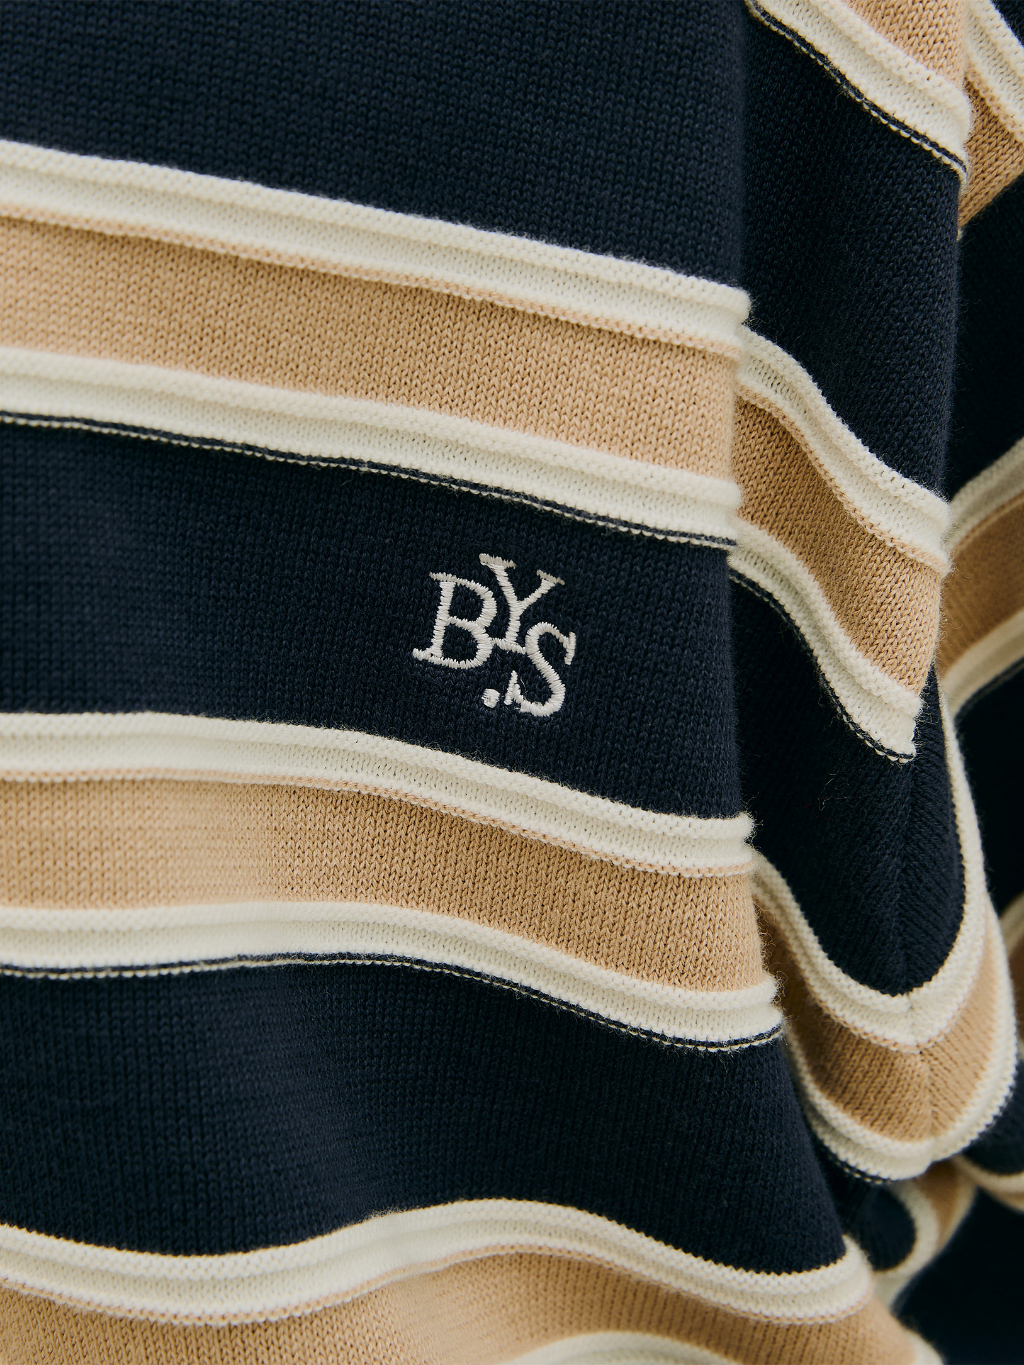 boyis-เสื้อยืด-textured-knit-tee-vol-4